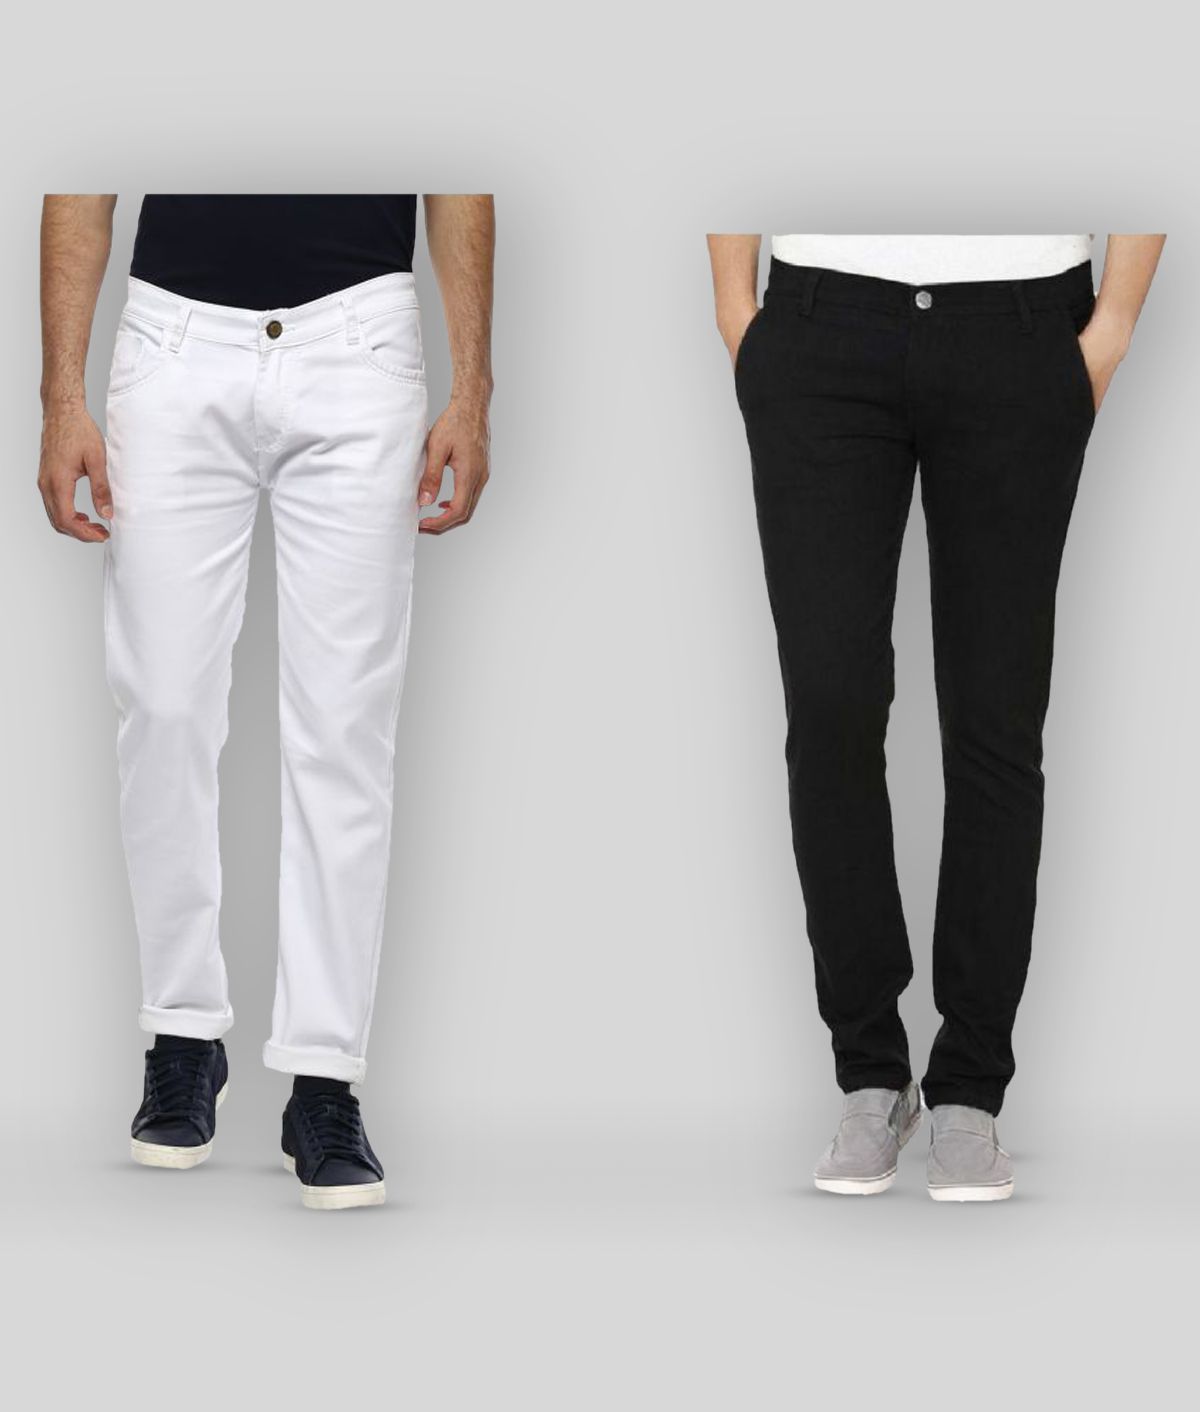     			Urbano Fashion - Multicolor Cotton Blend Slim Fit Men's Jeans ( Pack of 2 )